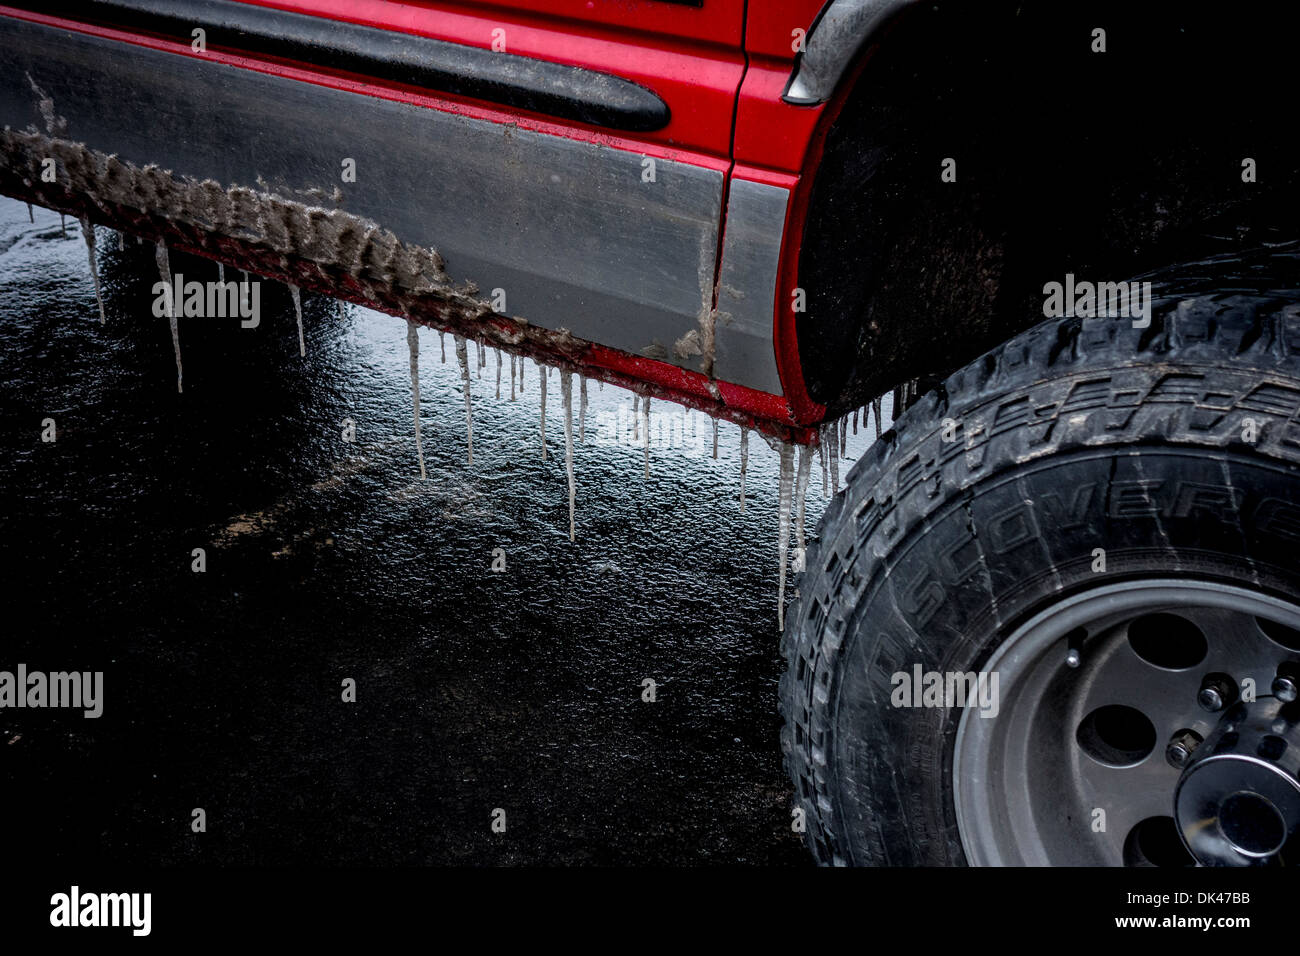 Wheel detail of a frozen truck Stock Photo